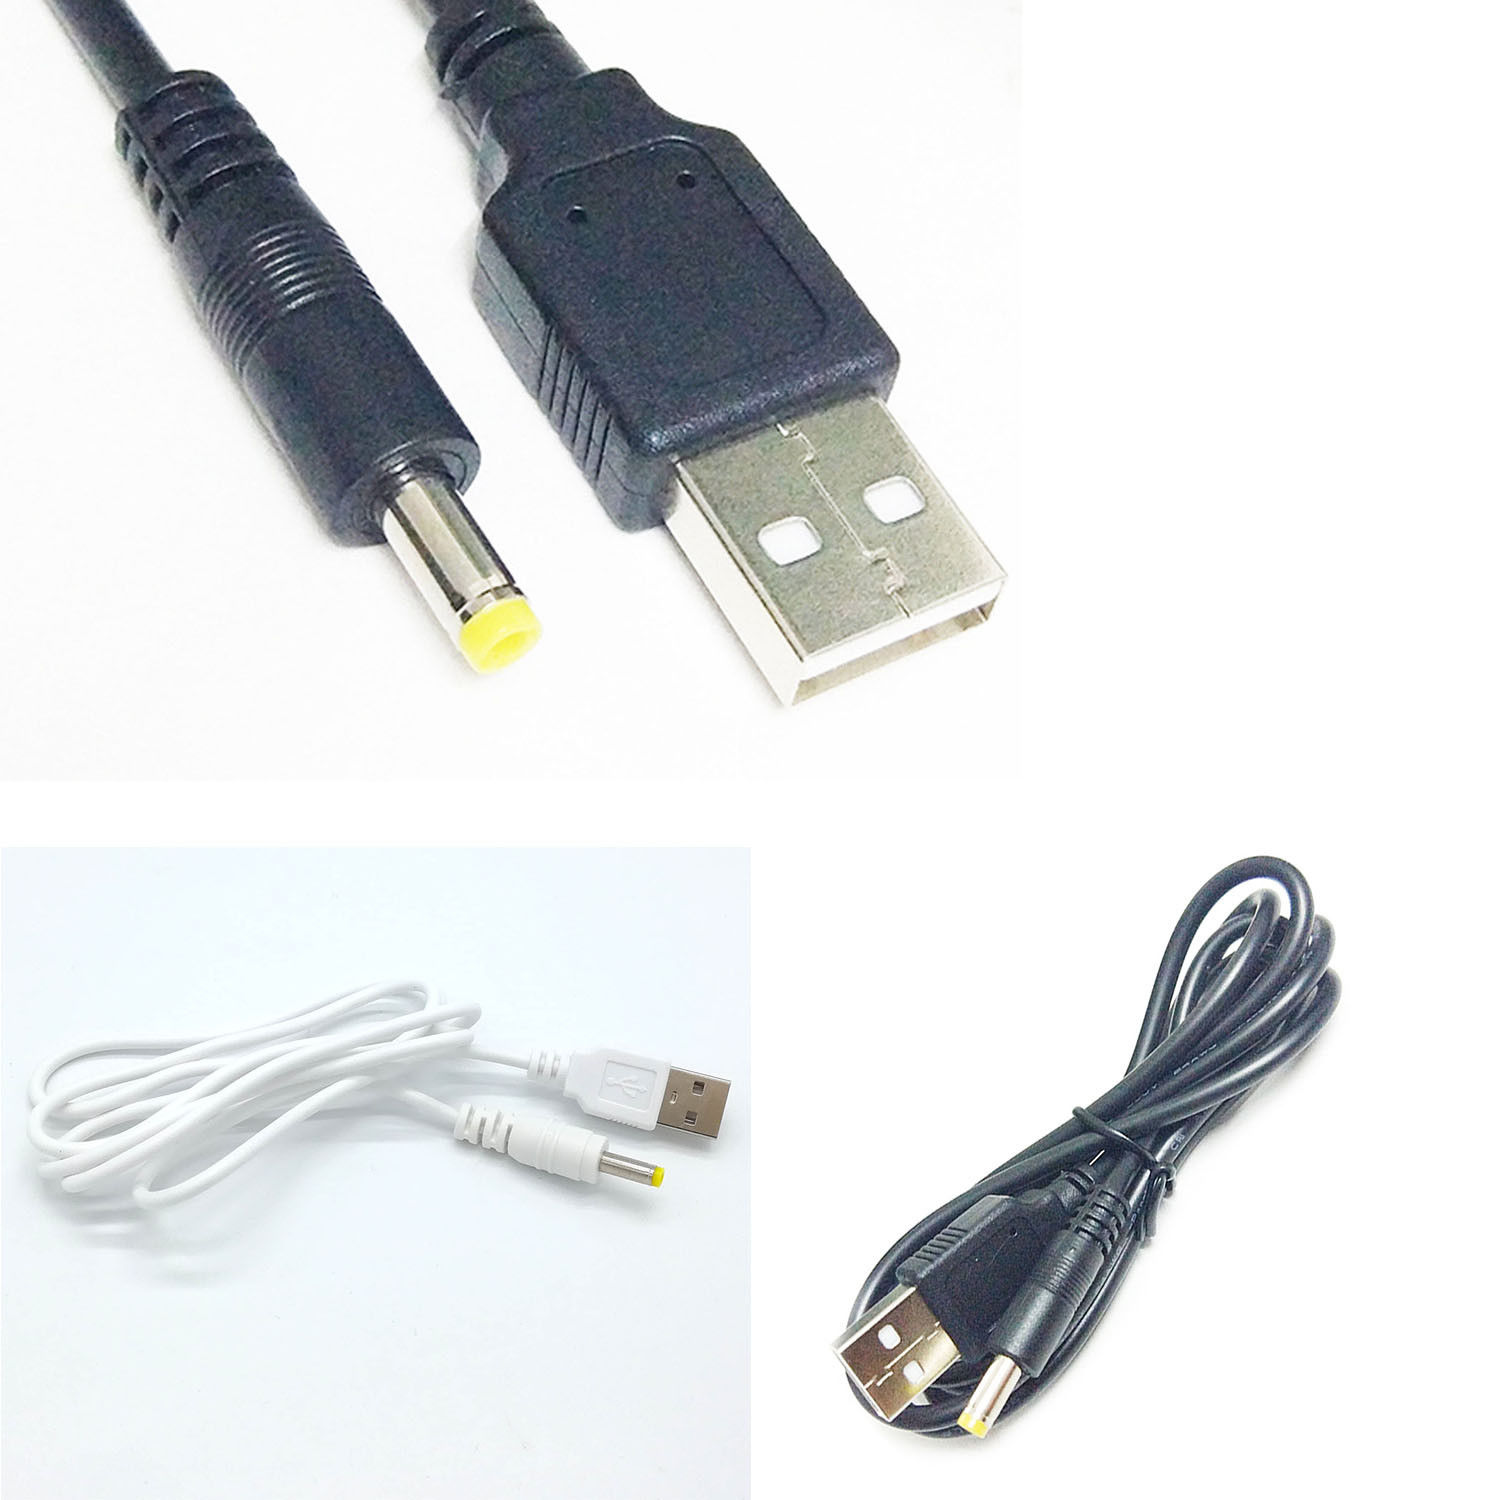 Usb Power Opladen Lader Kabel Voeding Voor Sony Psp Voor Sony PSP1000, PSP2000, PSP3000 Wit &amp; Zwart